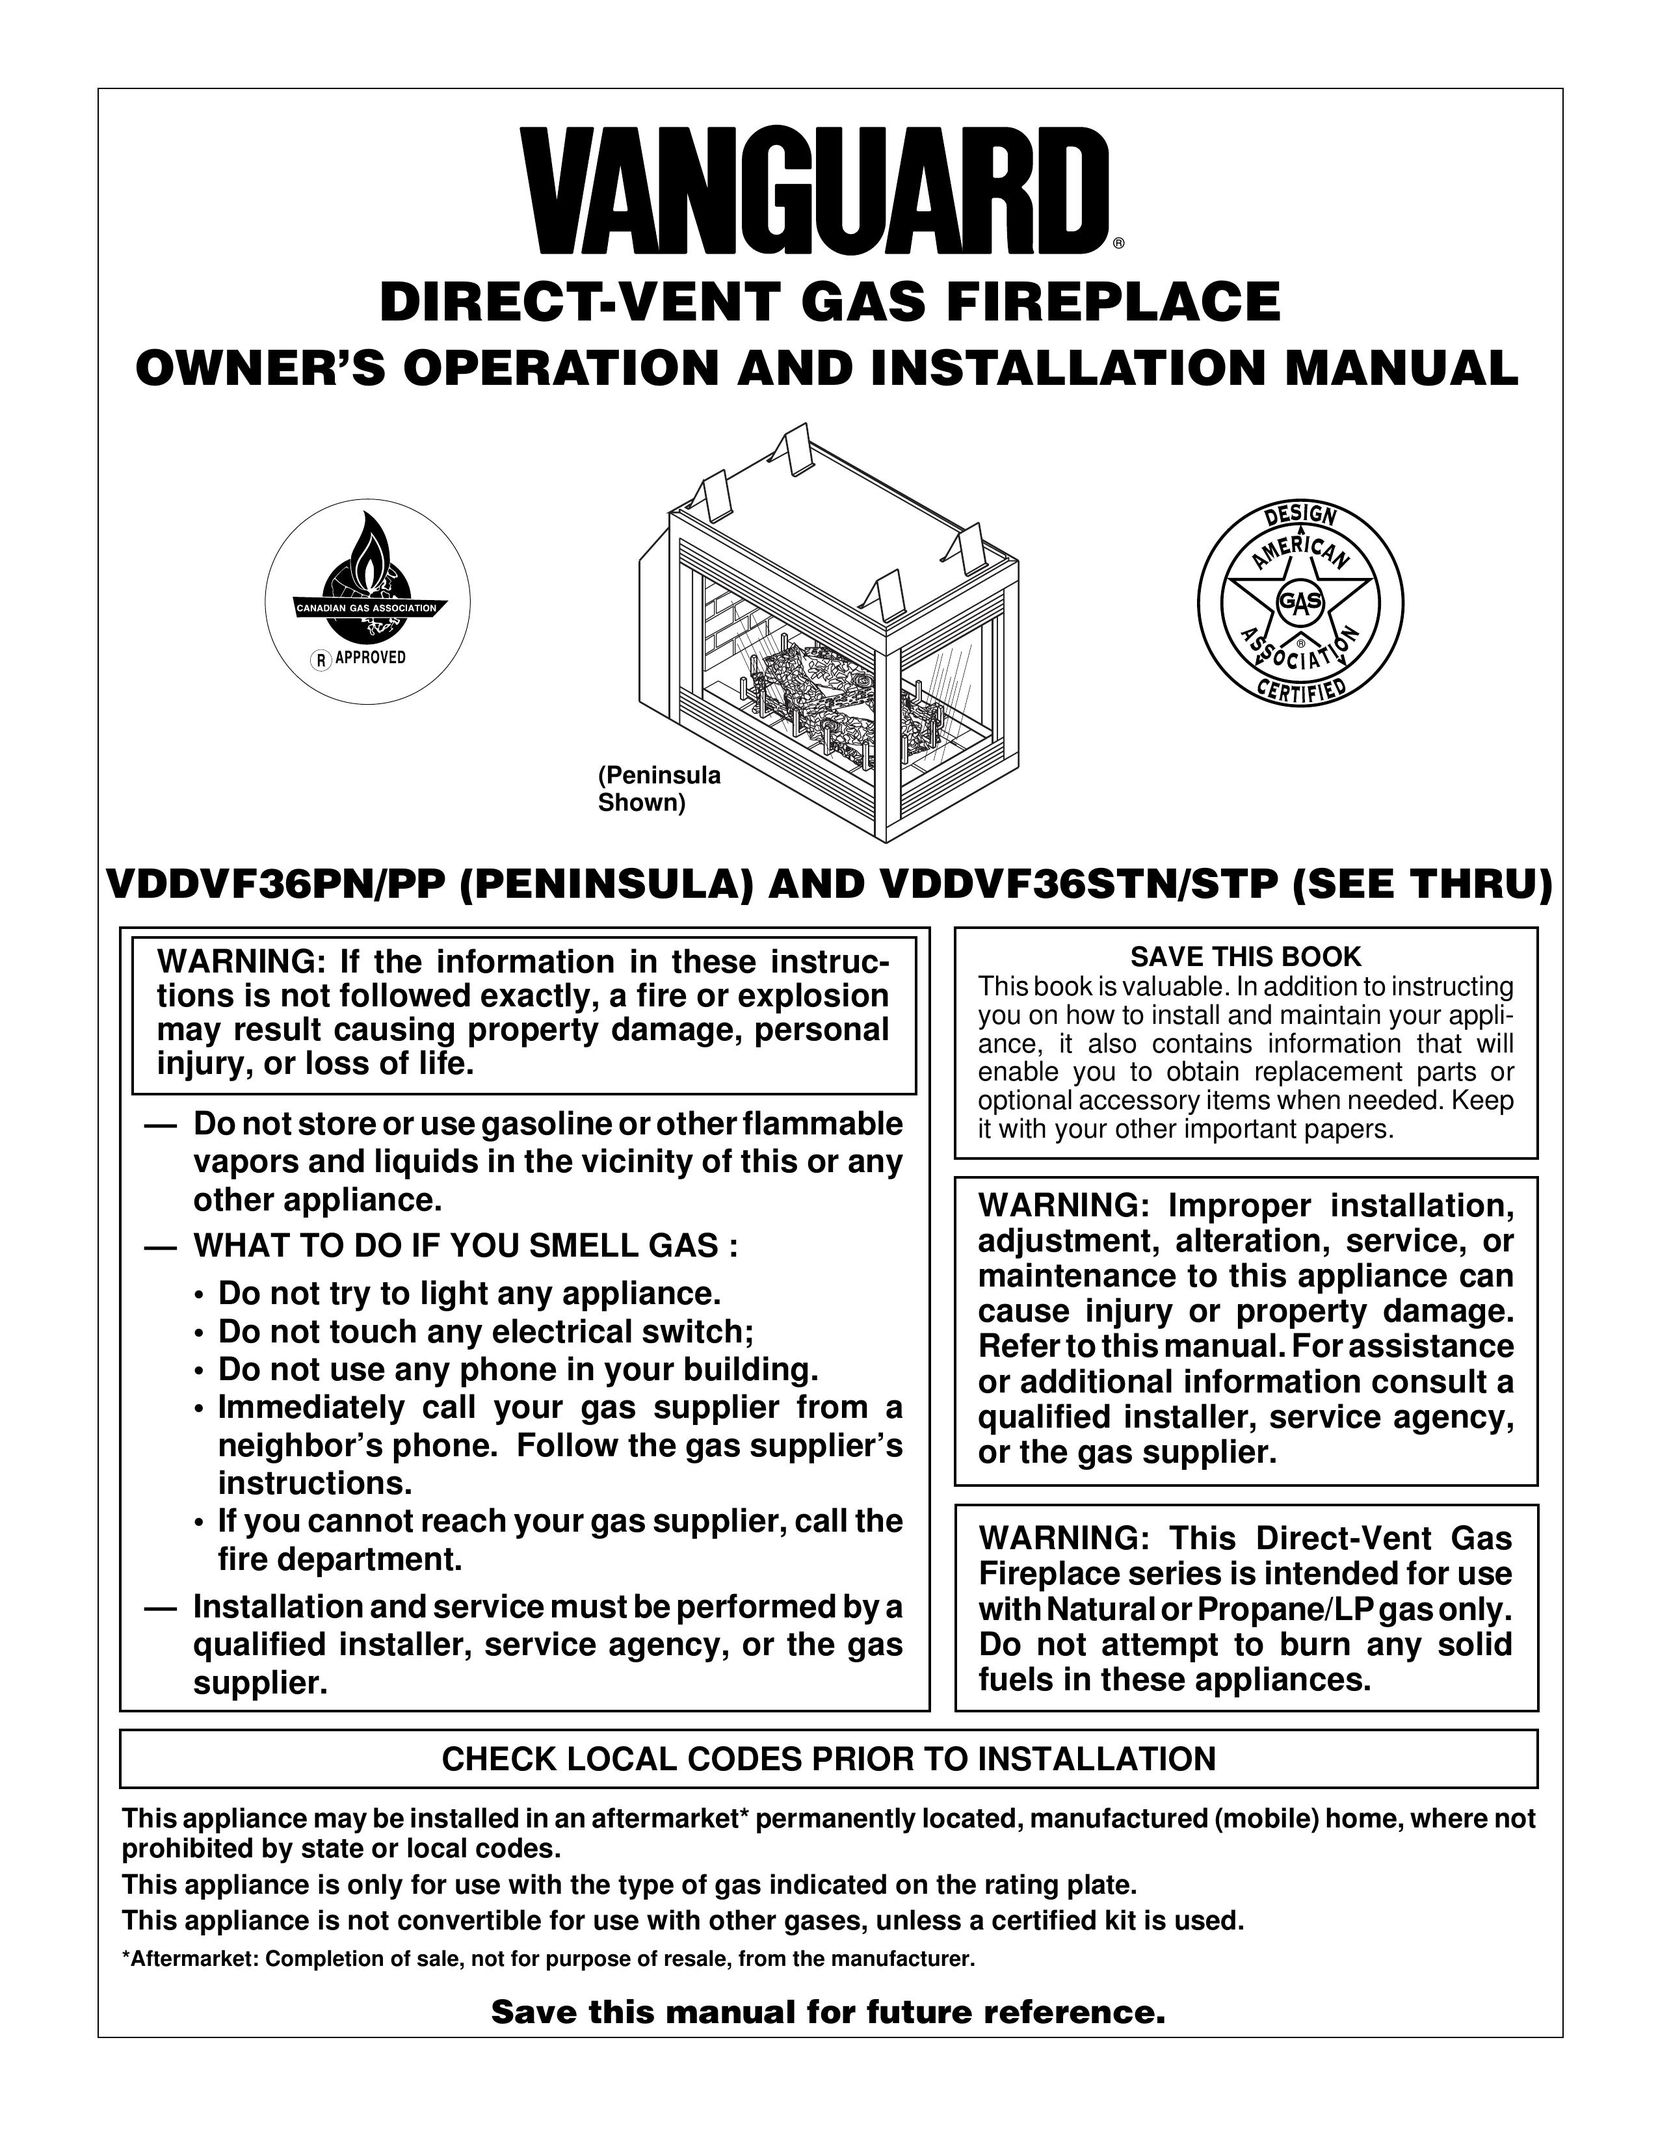 Vanguard Heating VDDVF36PN/PP Indoor Fireplace User Manual